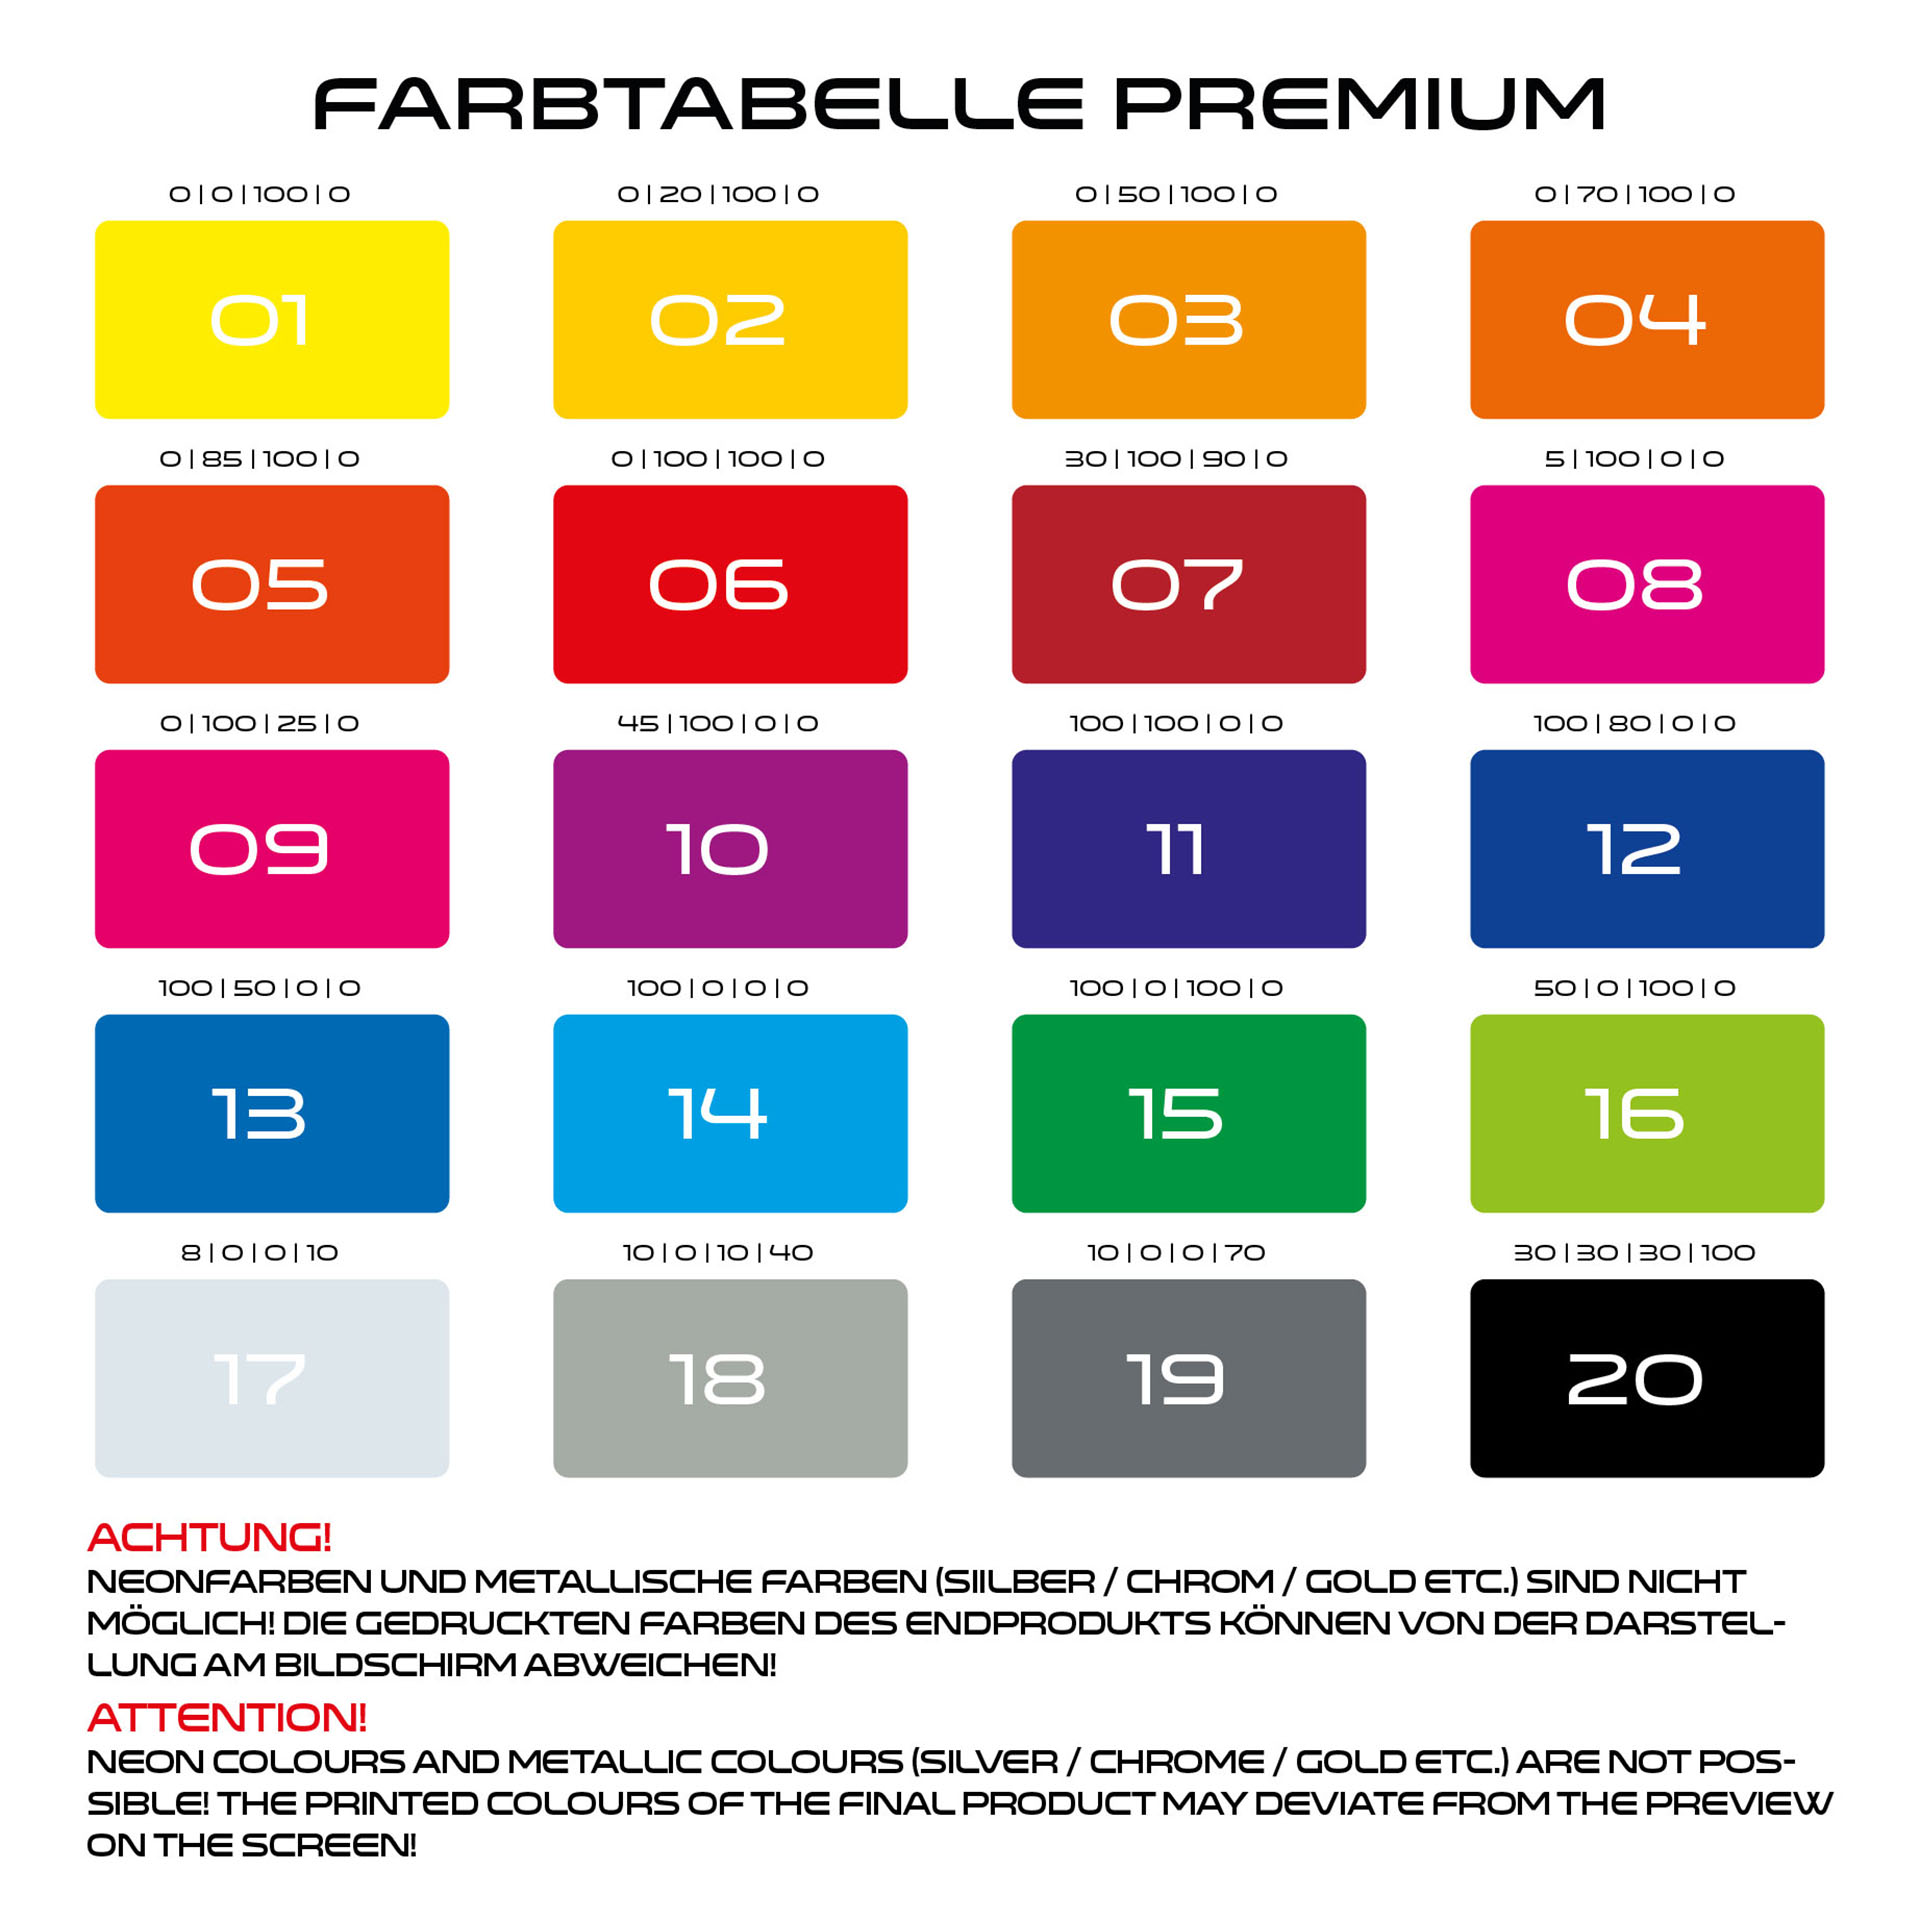 Renngrib V3 Felgenaufkleber Premium Farbtabelle Premium Wheelsticker